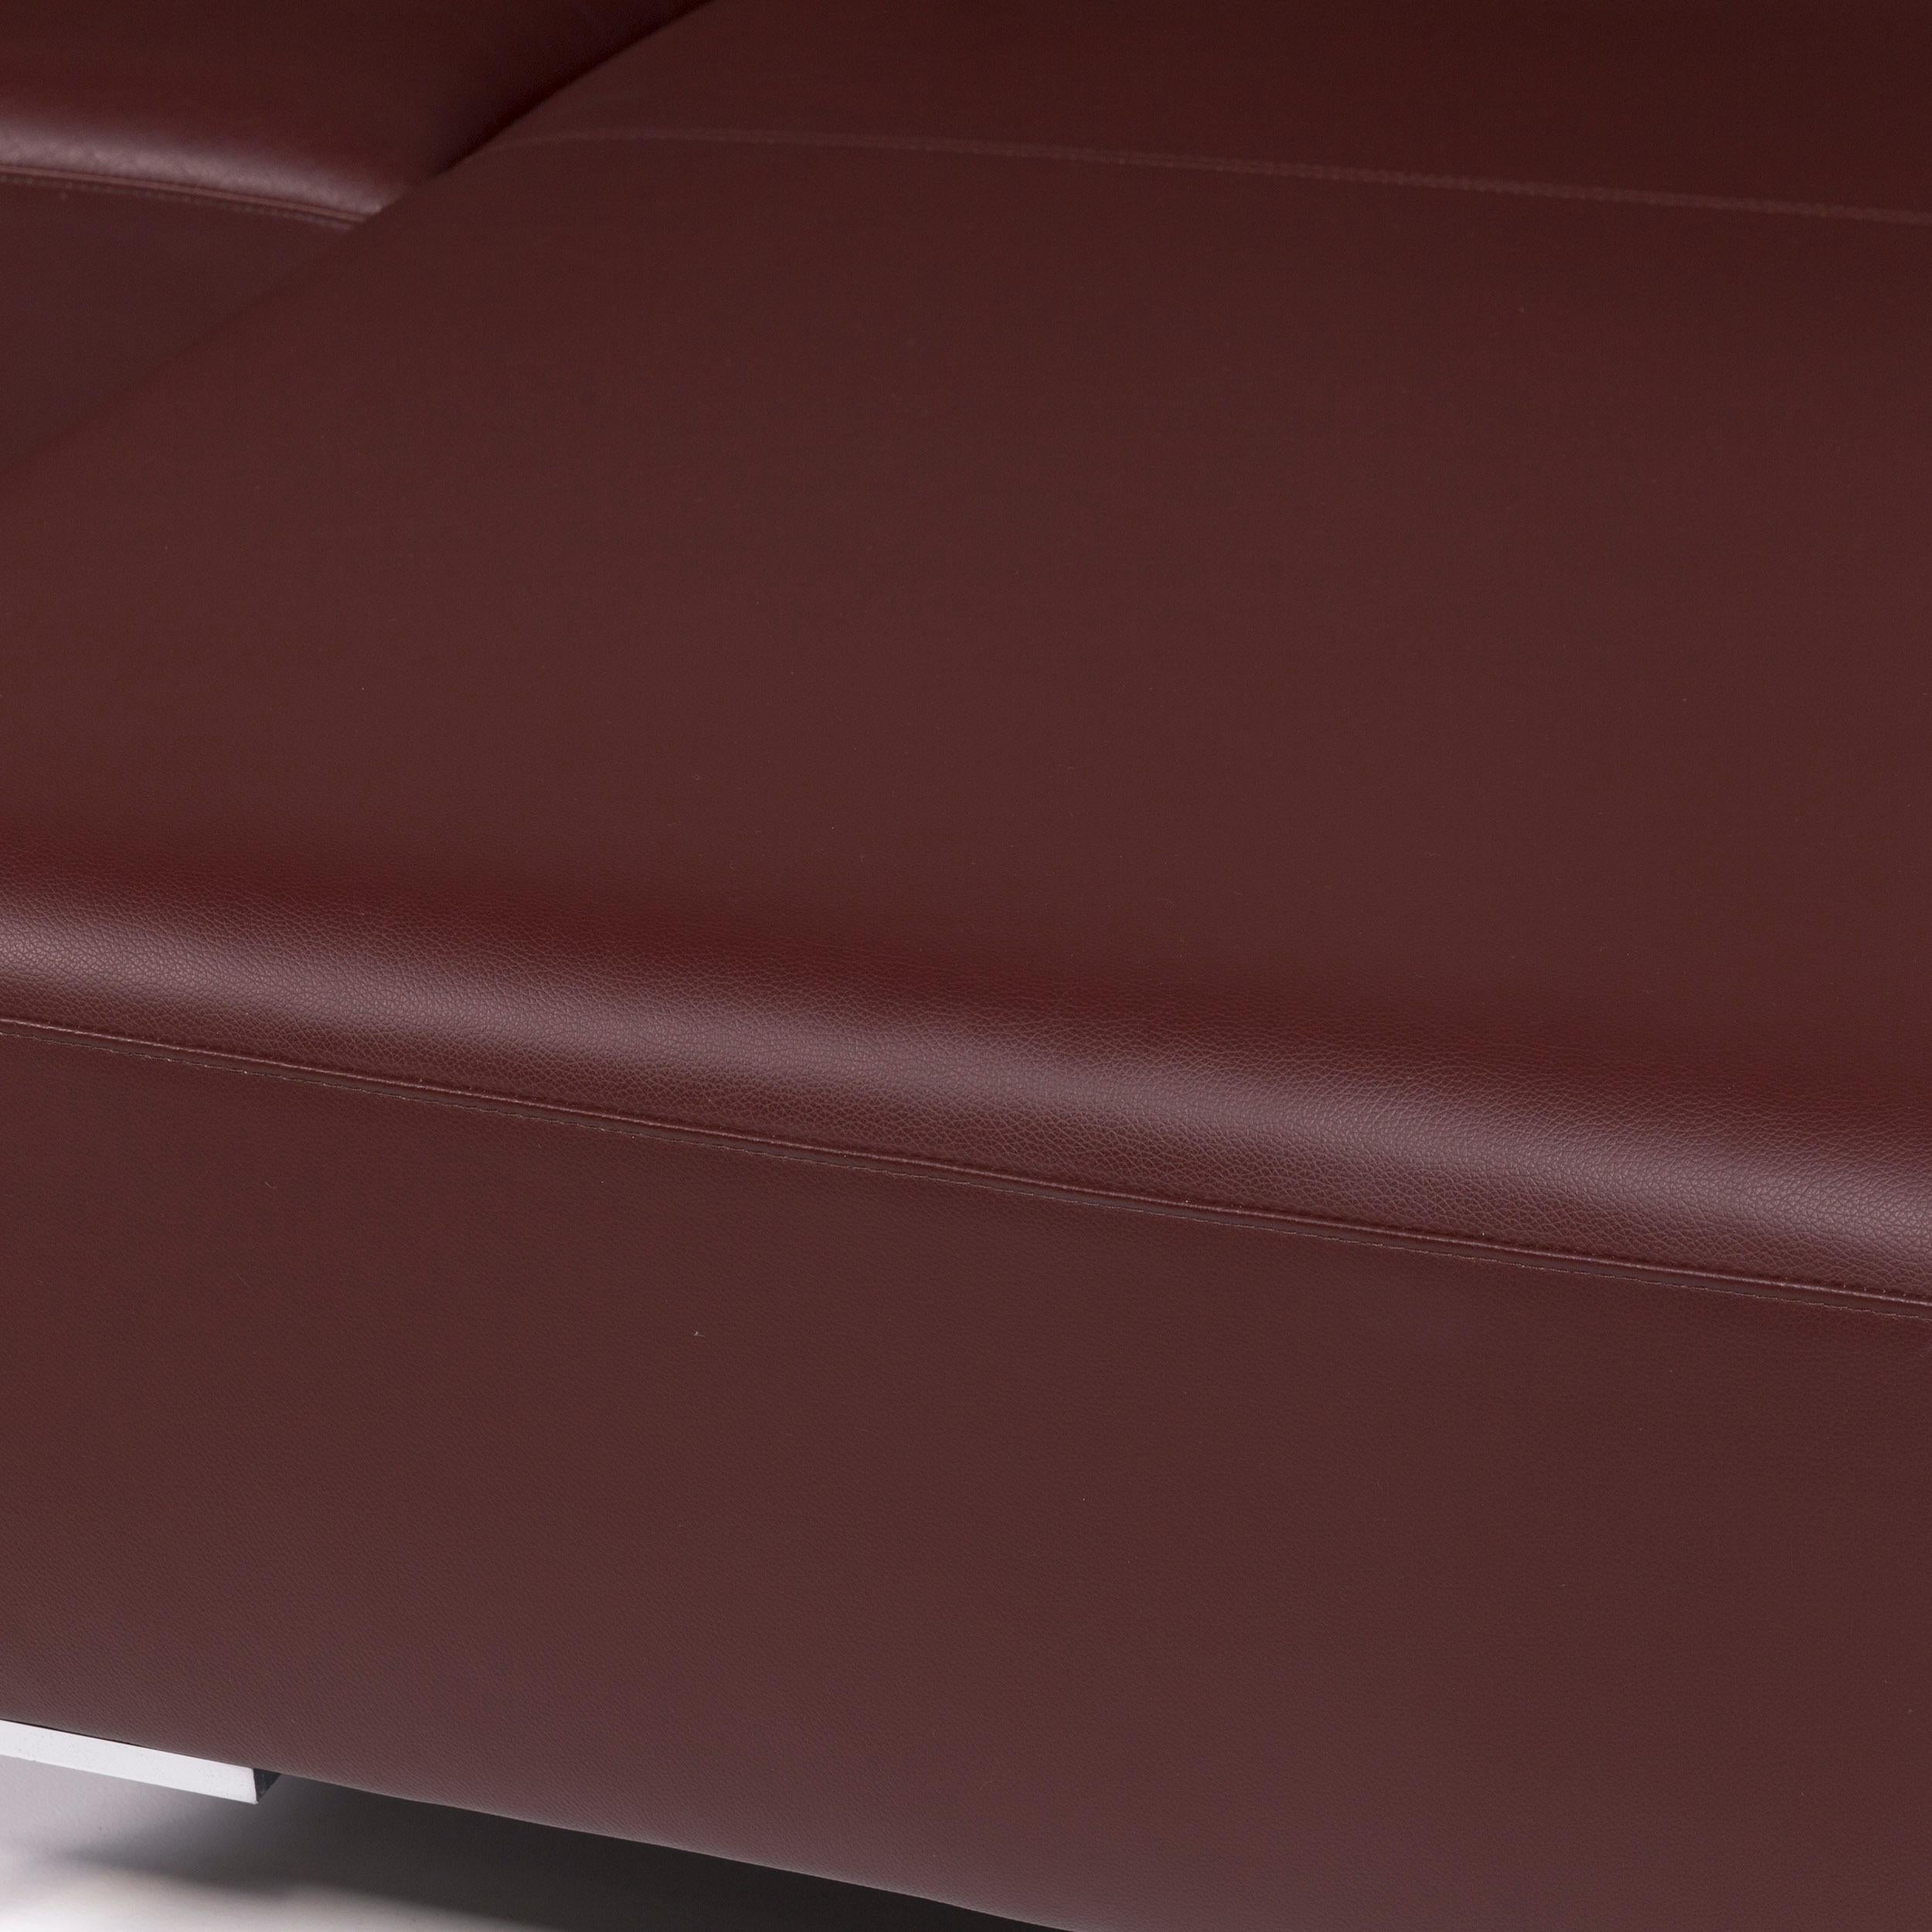 German Brühl & Sippold Leather Corner Sofa Bordeaux Dark Red Auburn Sofa Function Couch For Sale